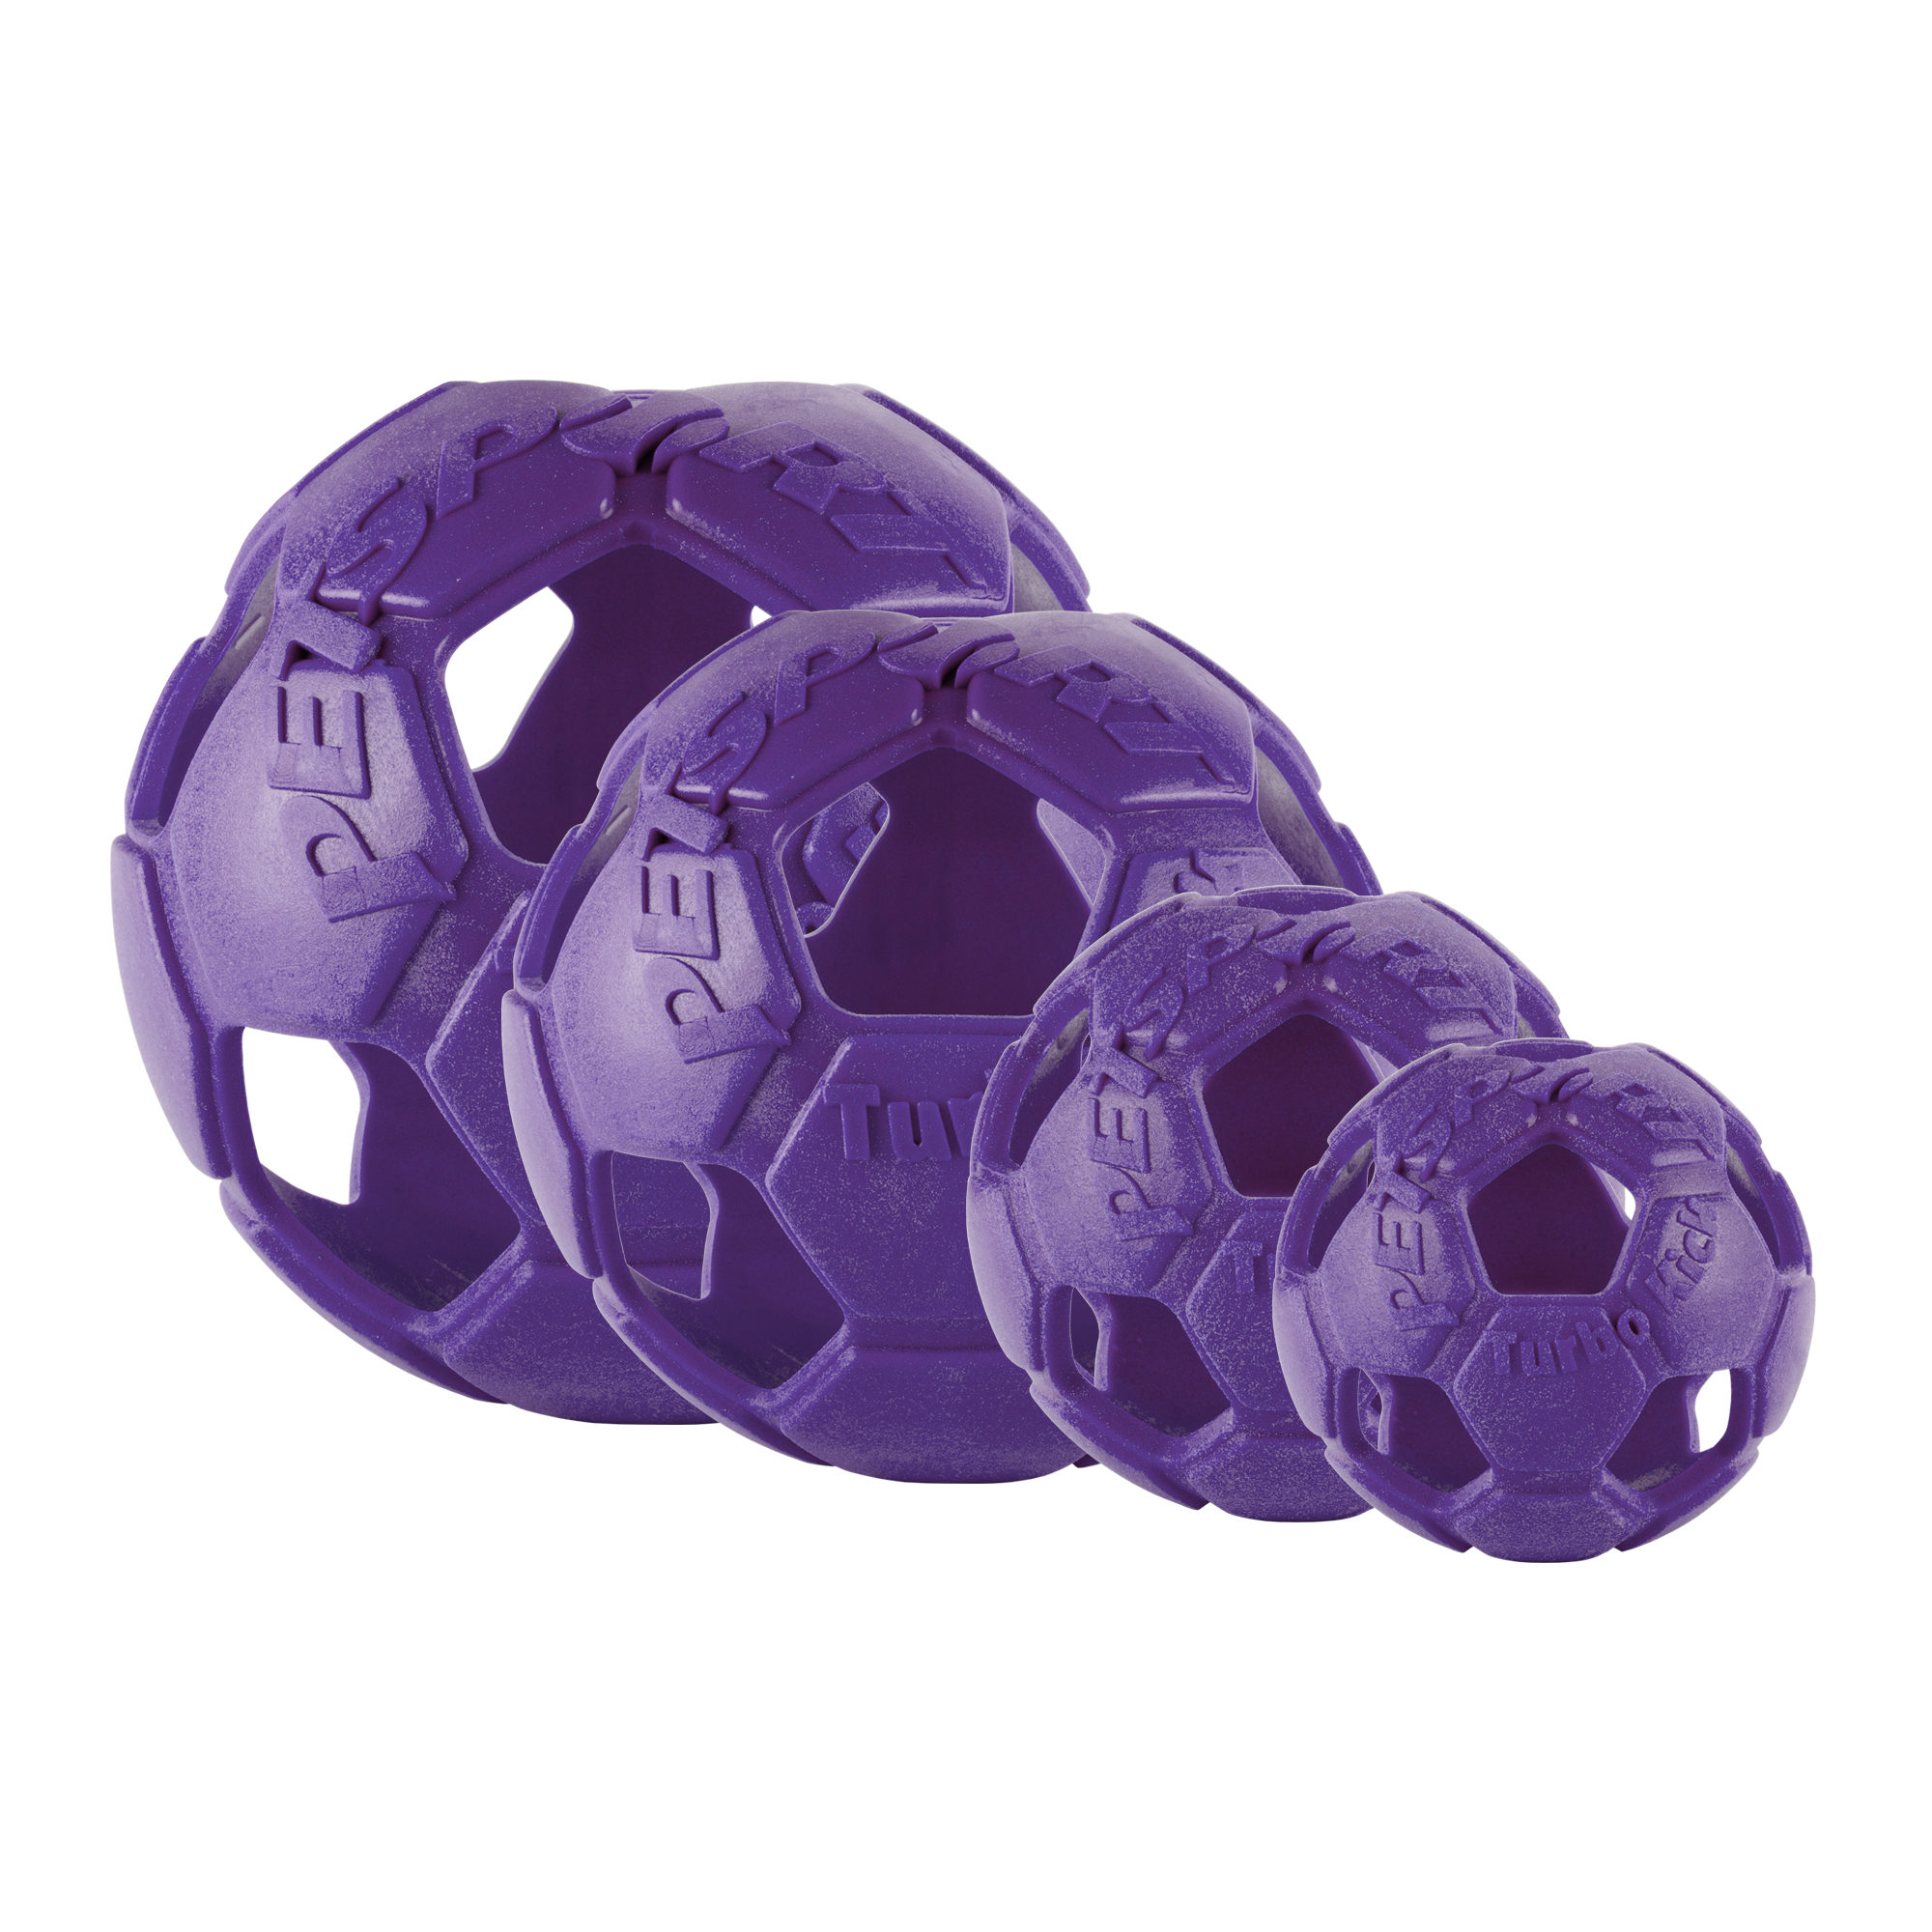 Petsport Turbo Kick Soccer Ball